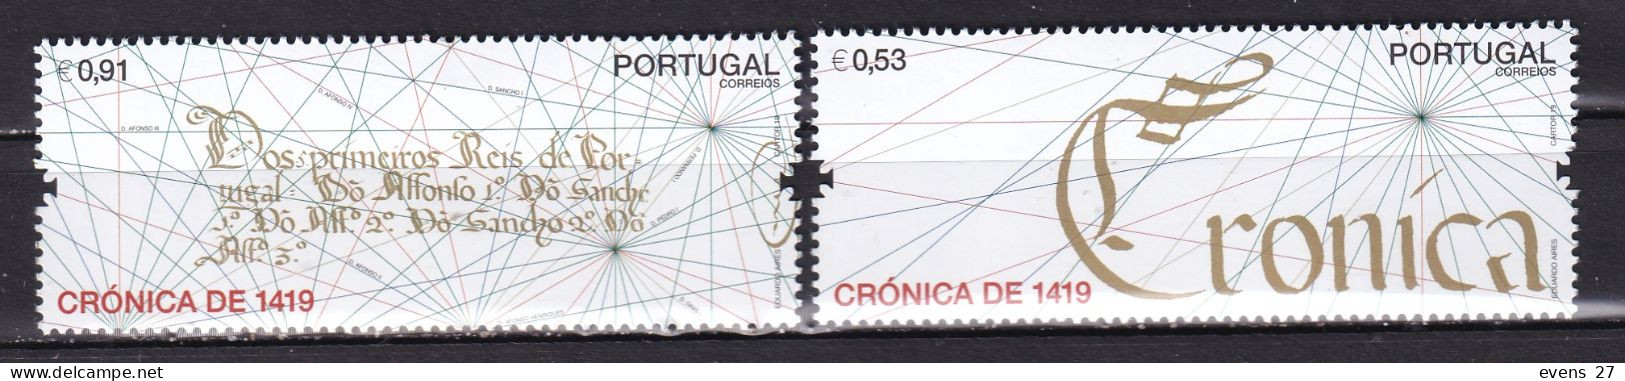 PORTUGAL-2019-CRONICA-MNH - Ongebruikt